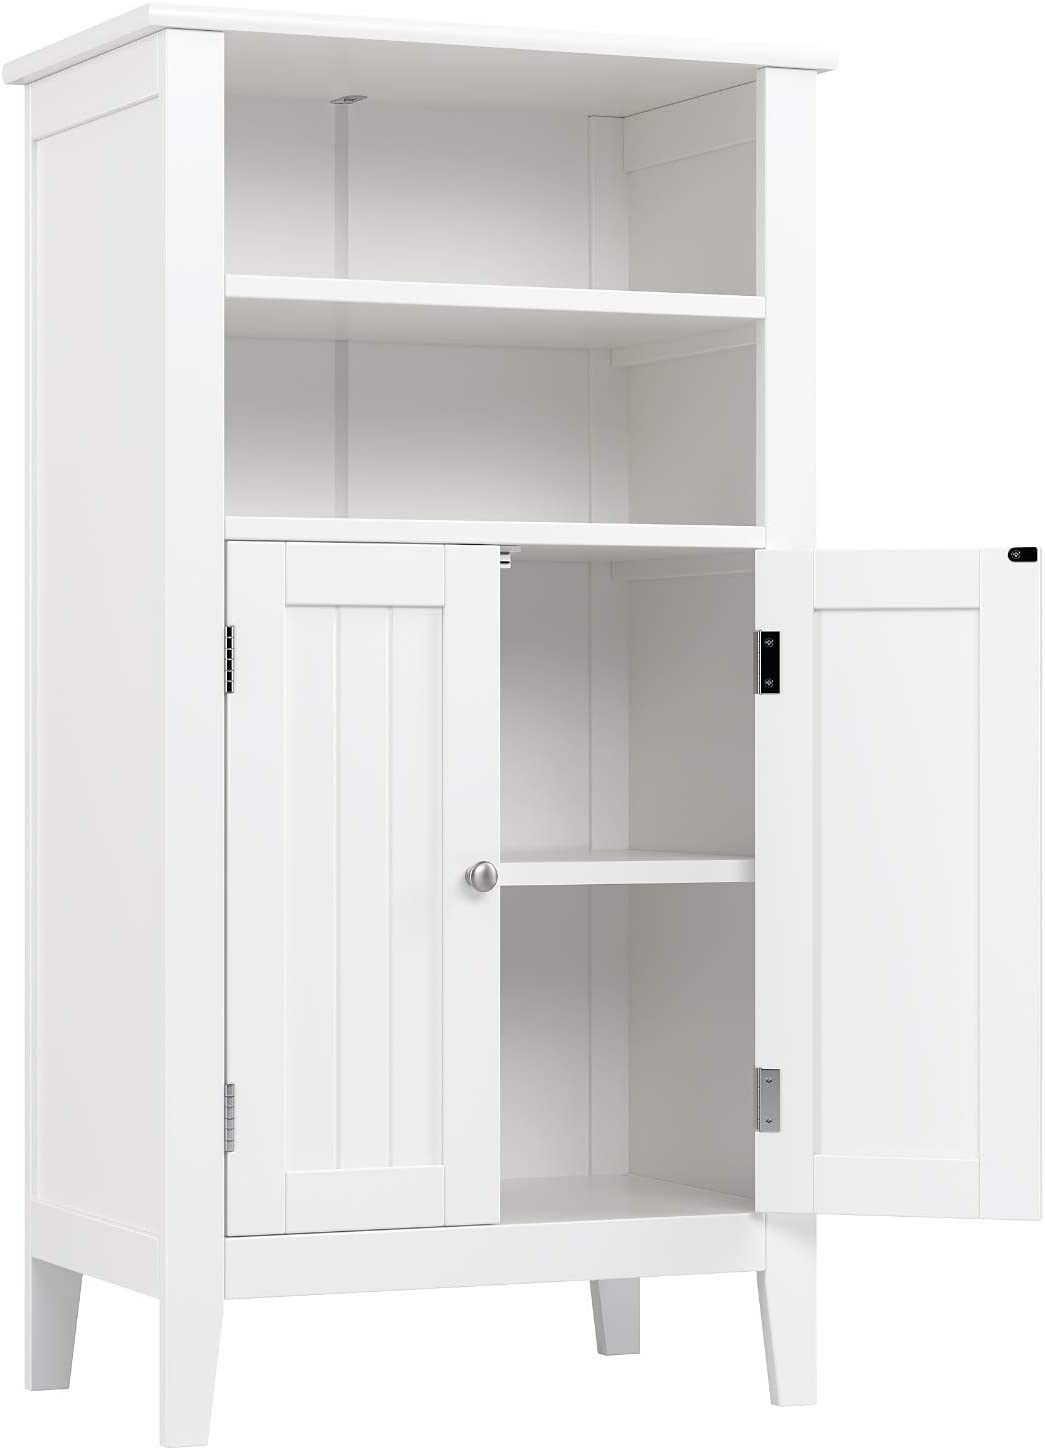 Homfa 2 Tier Shelves Bathroom Storage Cabinet, Wood Storage Floor Cabinet with 2 Doors, White - image 2 of 12